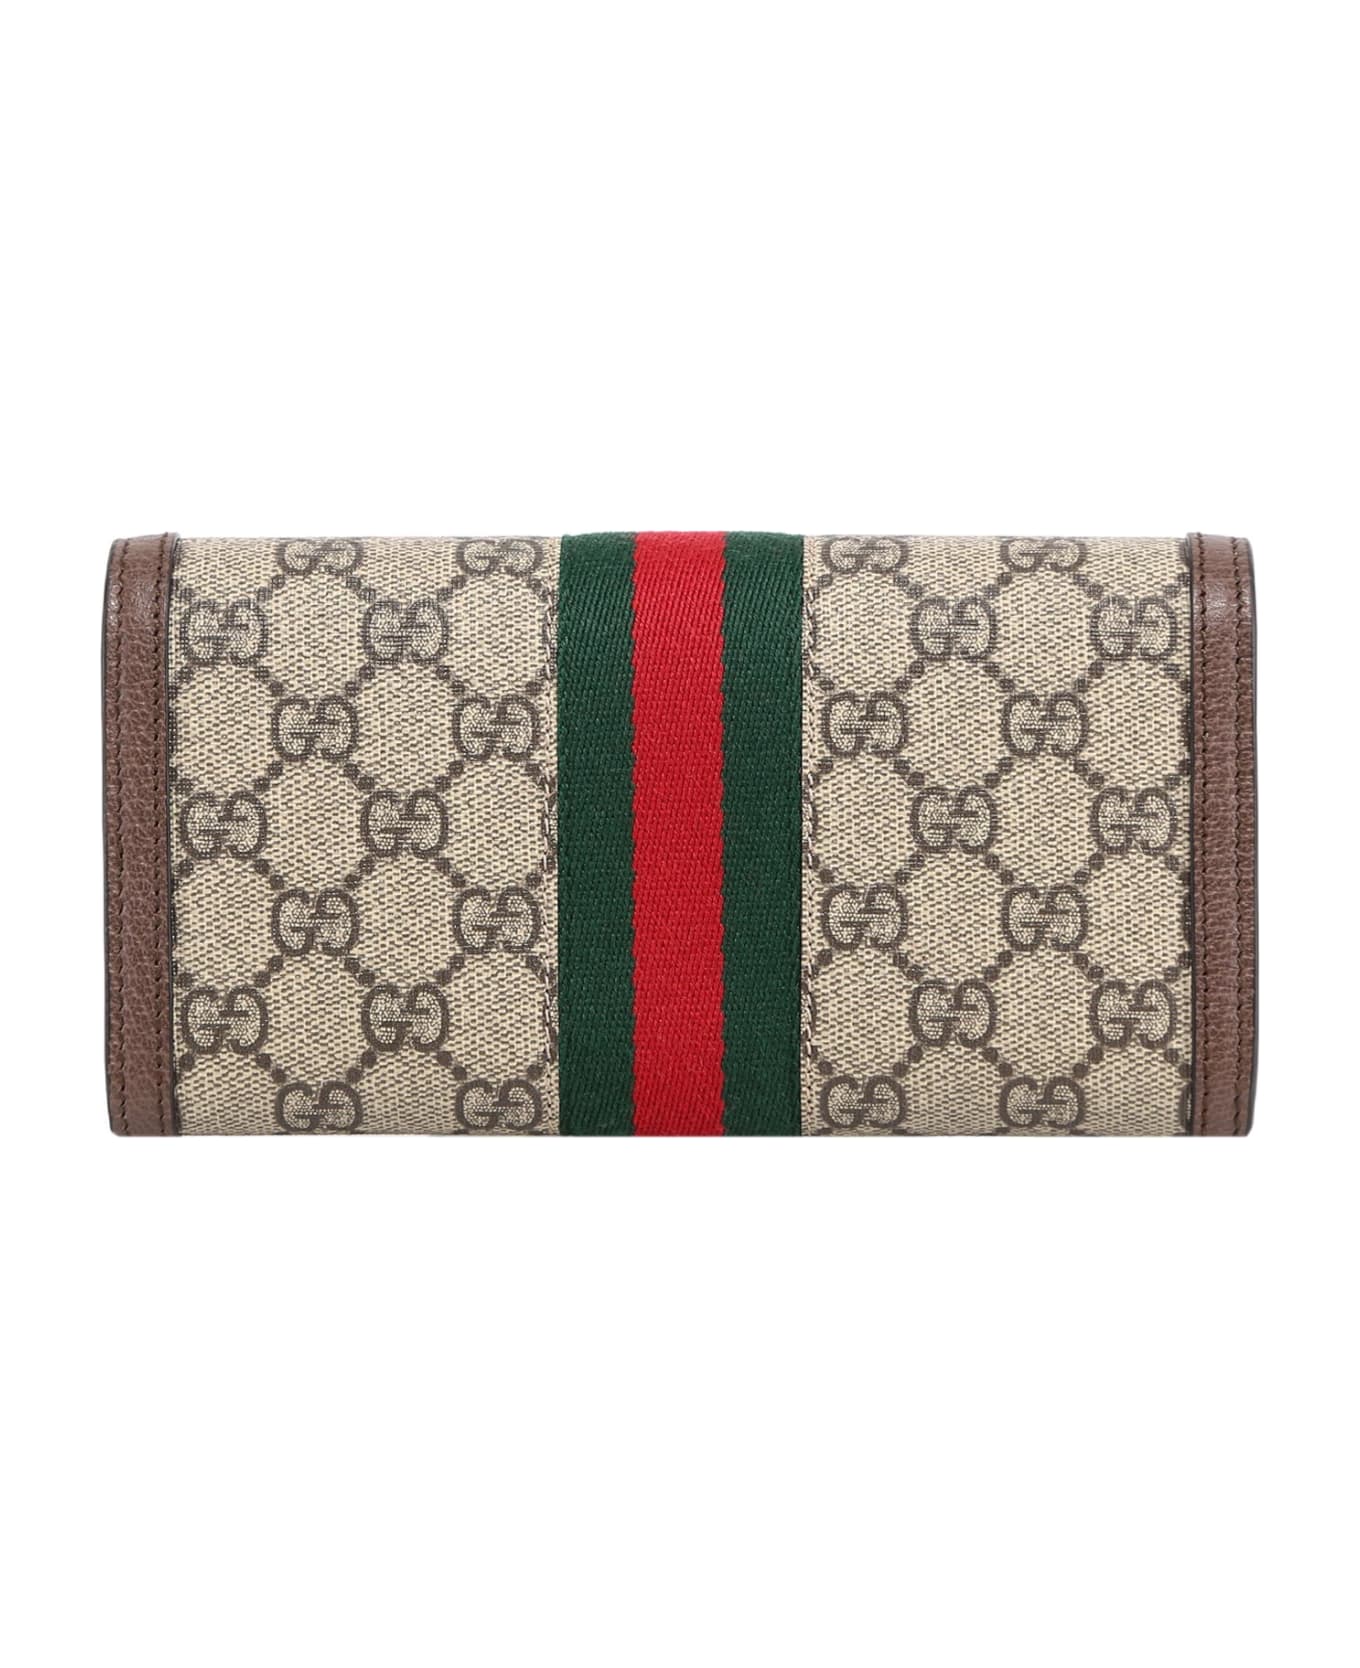 Gucci Wallet5 - Beige 財布